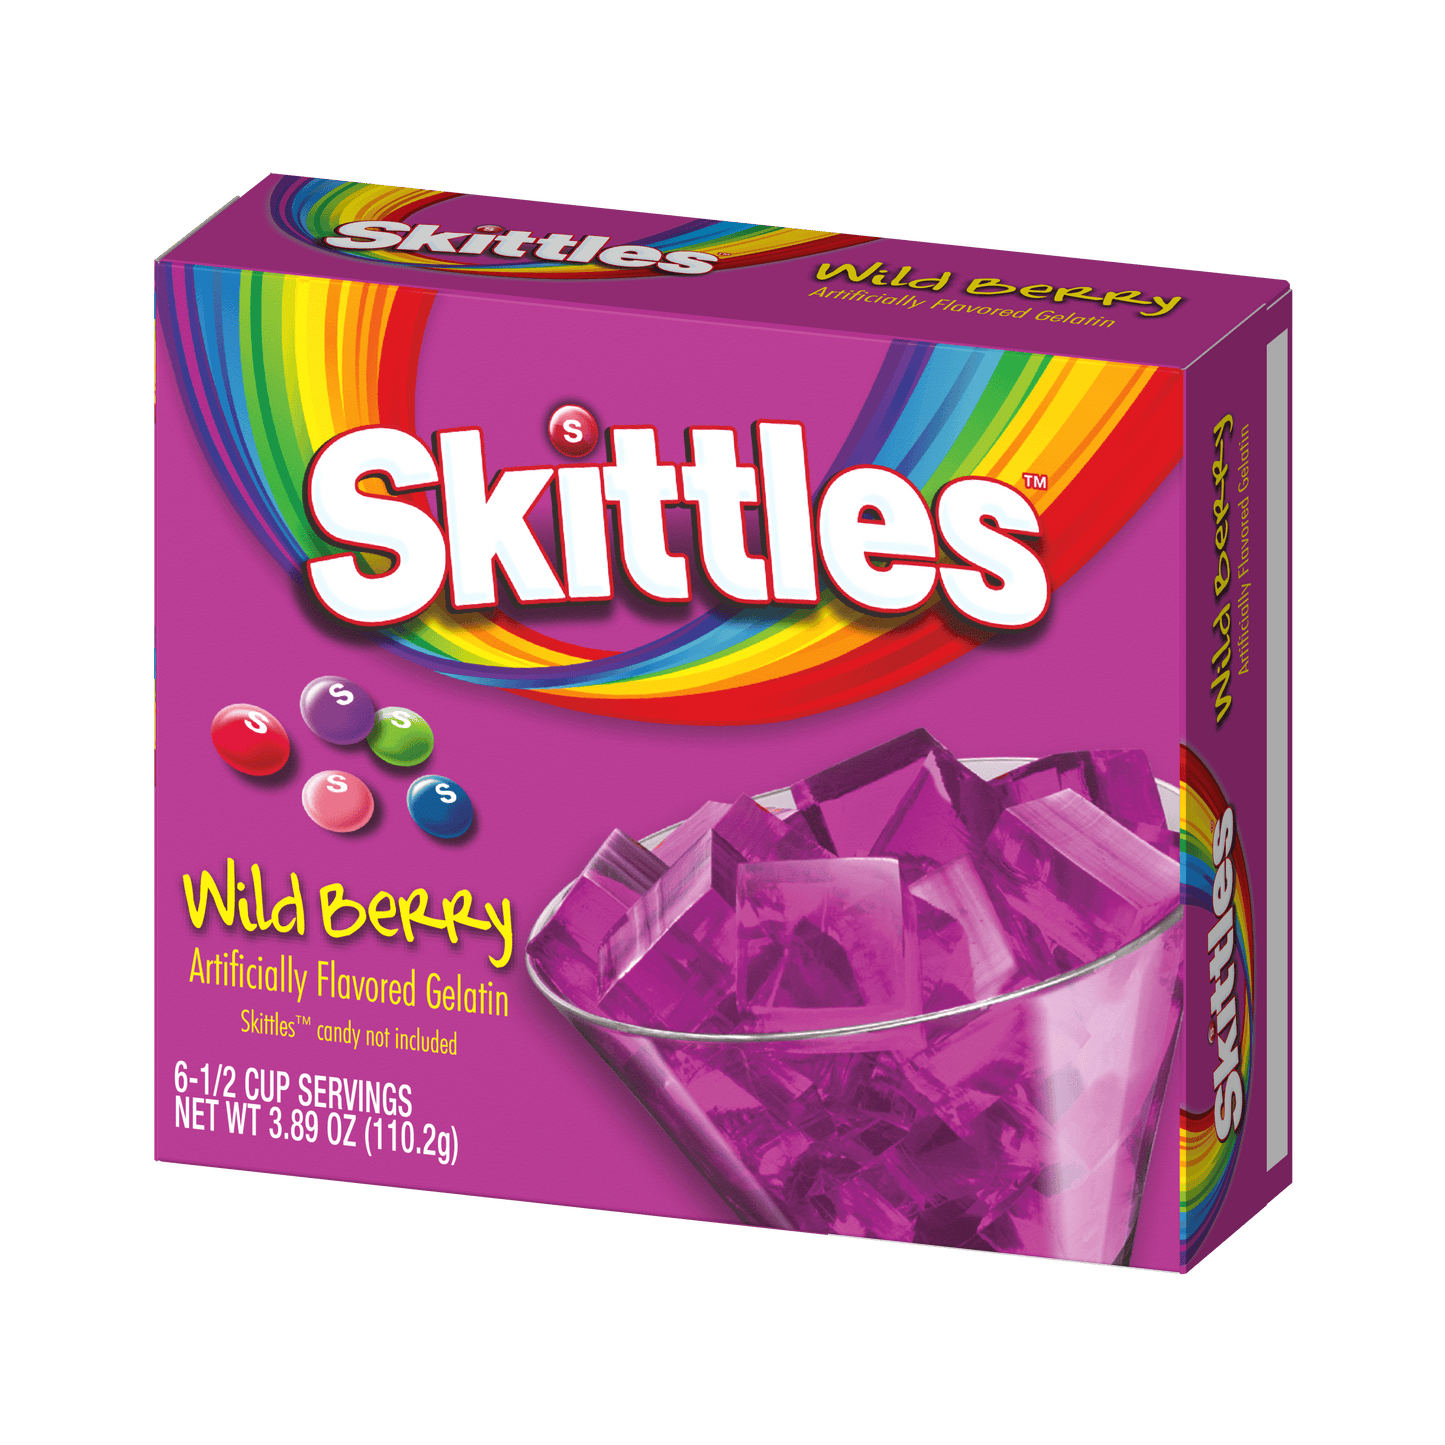 Skittles Gelatin wild berry flavor packaging